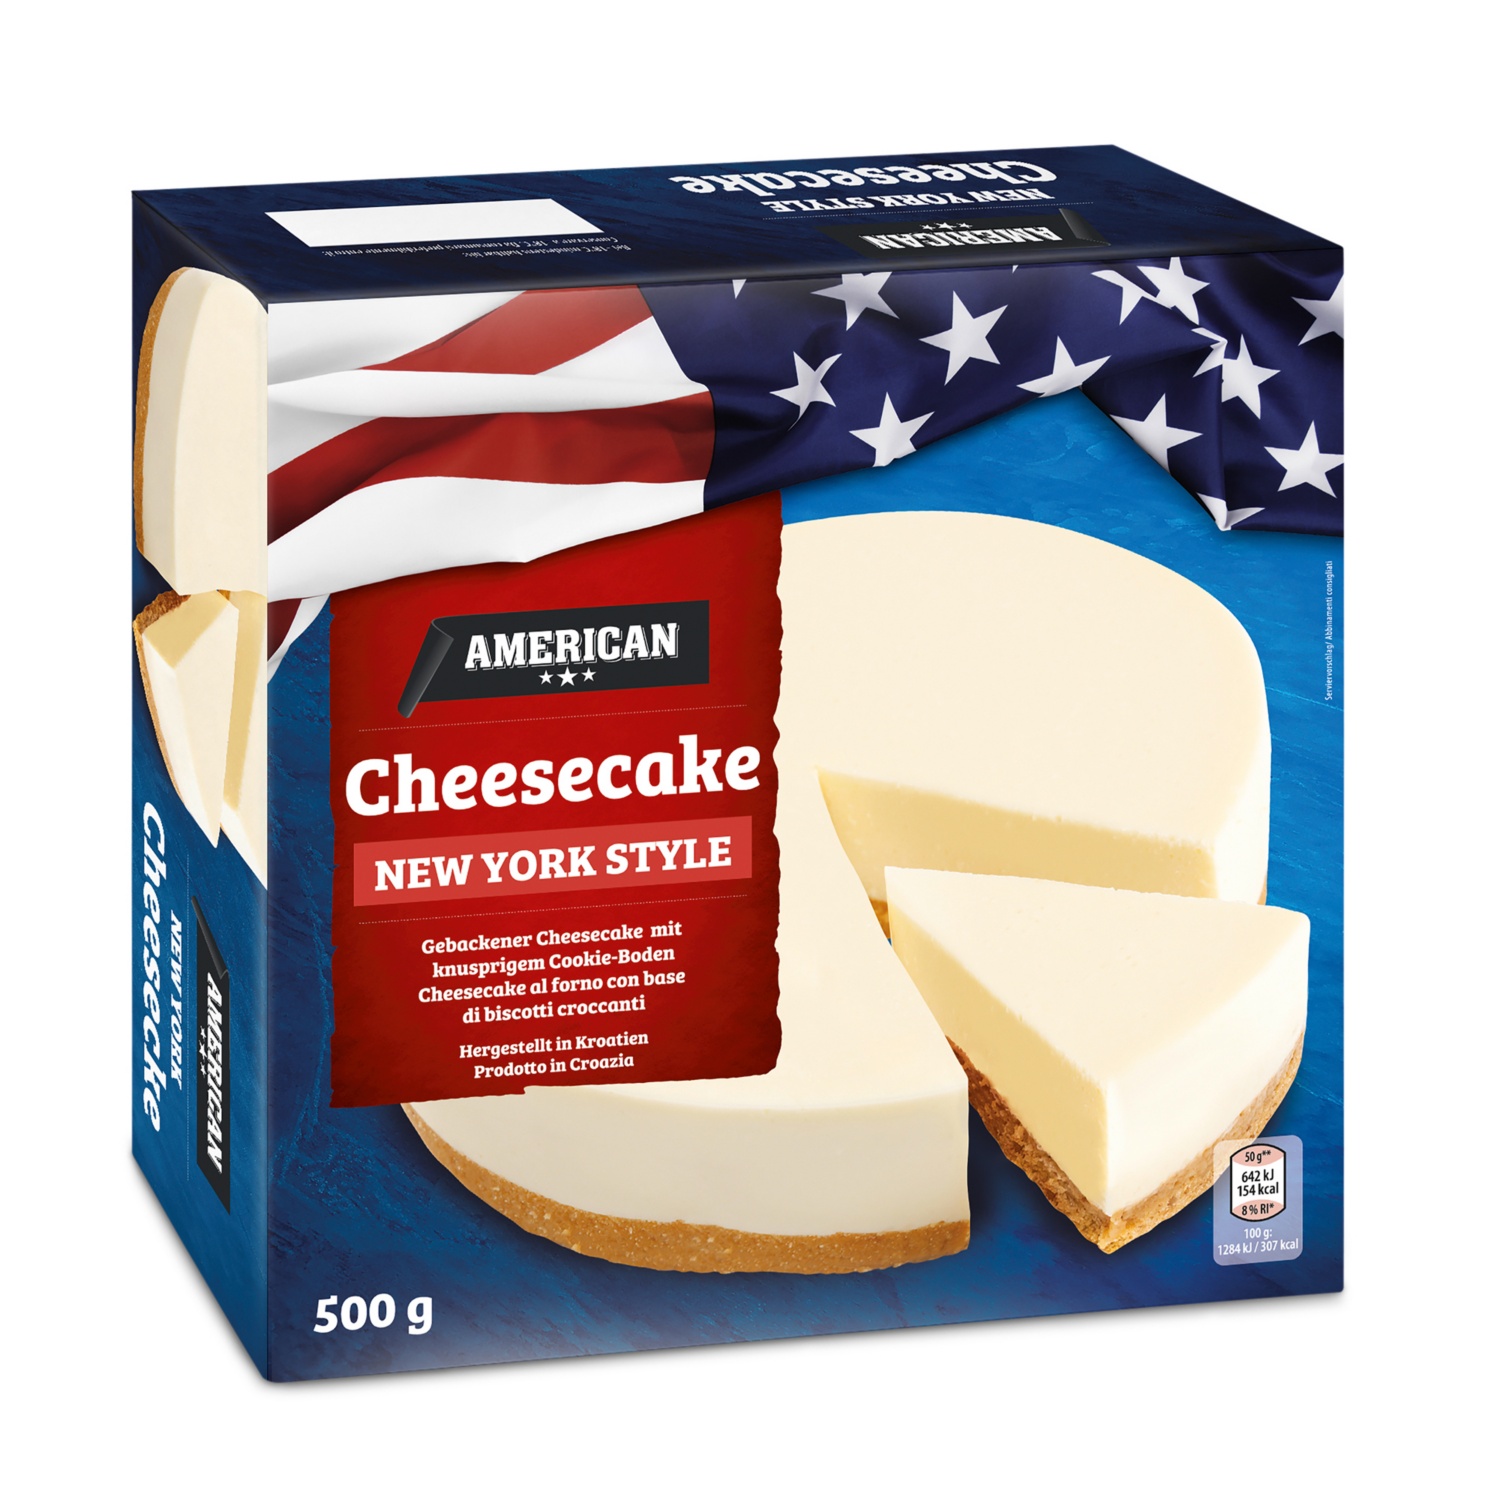 AMERICAN Cheesecake, Classic